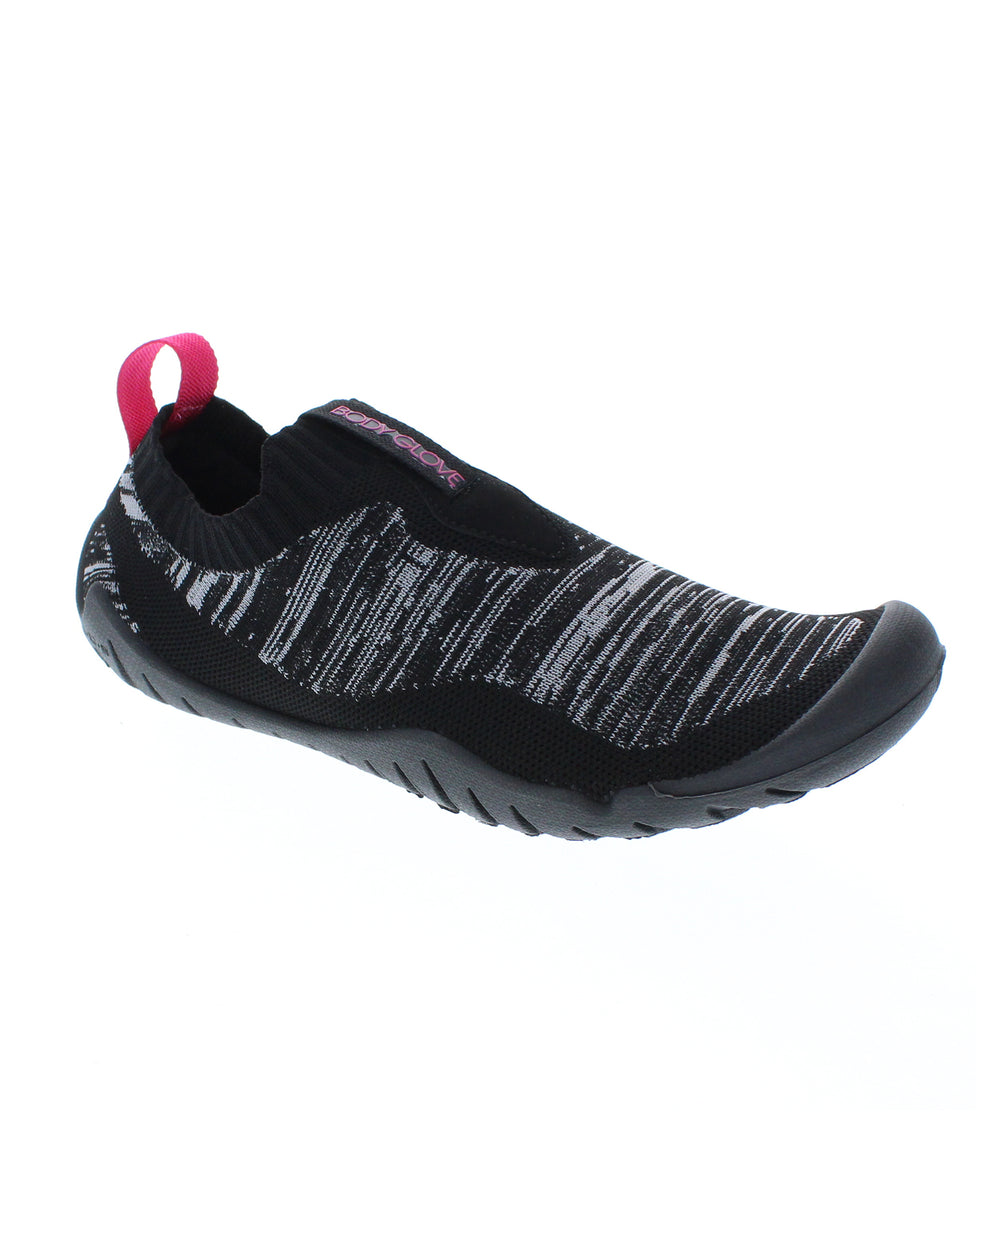 Women's Hydro Knit Siphon Water Shoes - Black/Raspberry